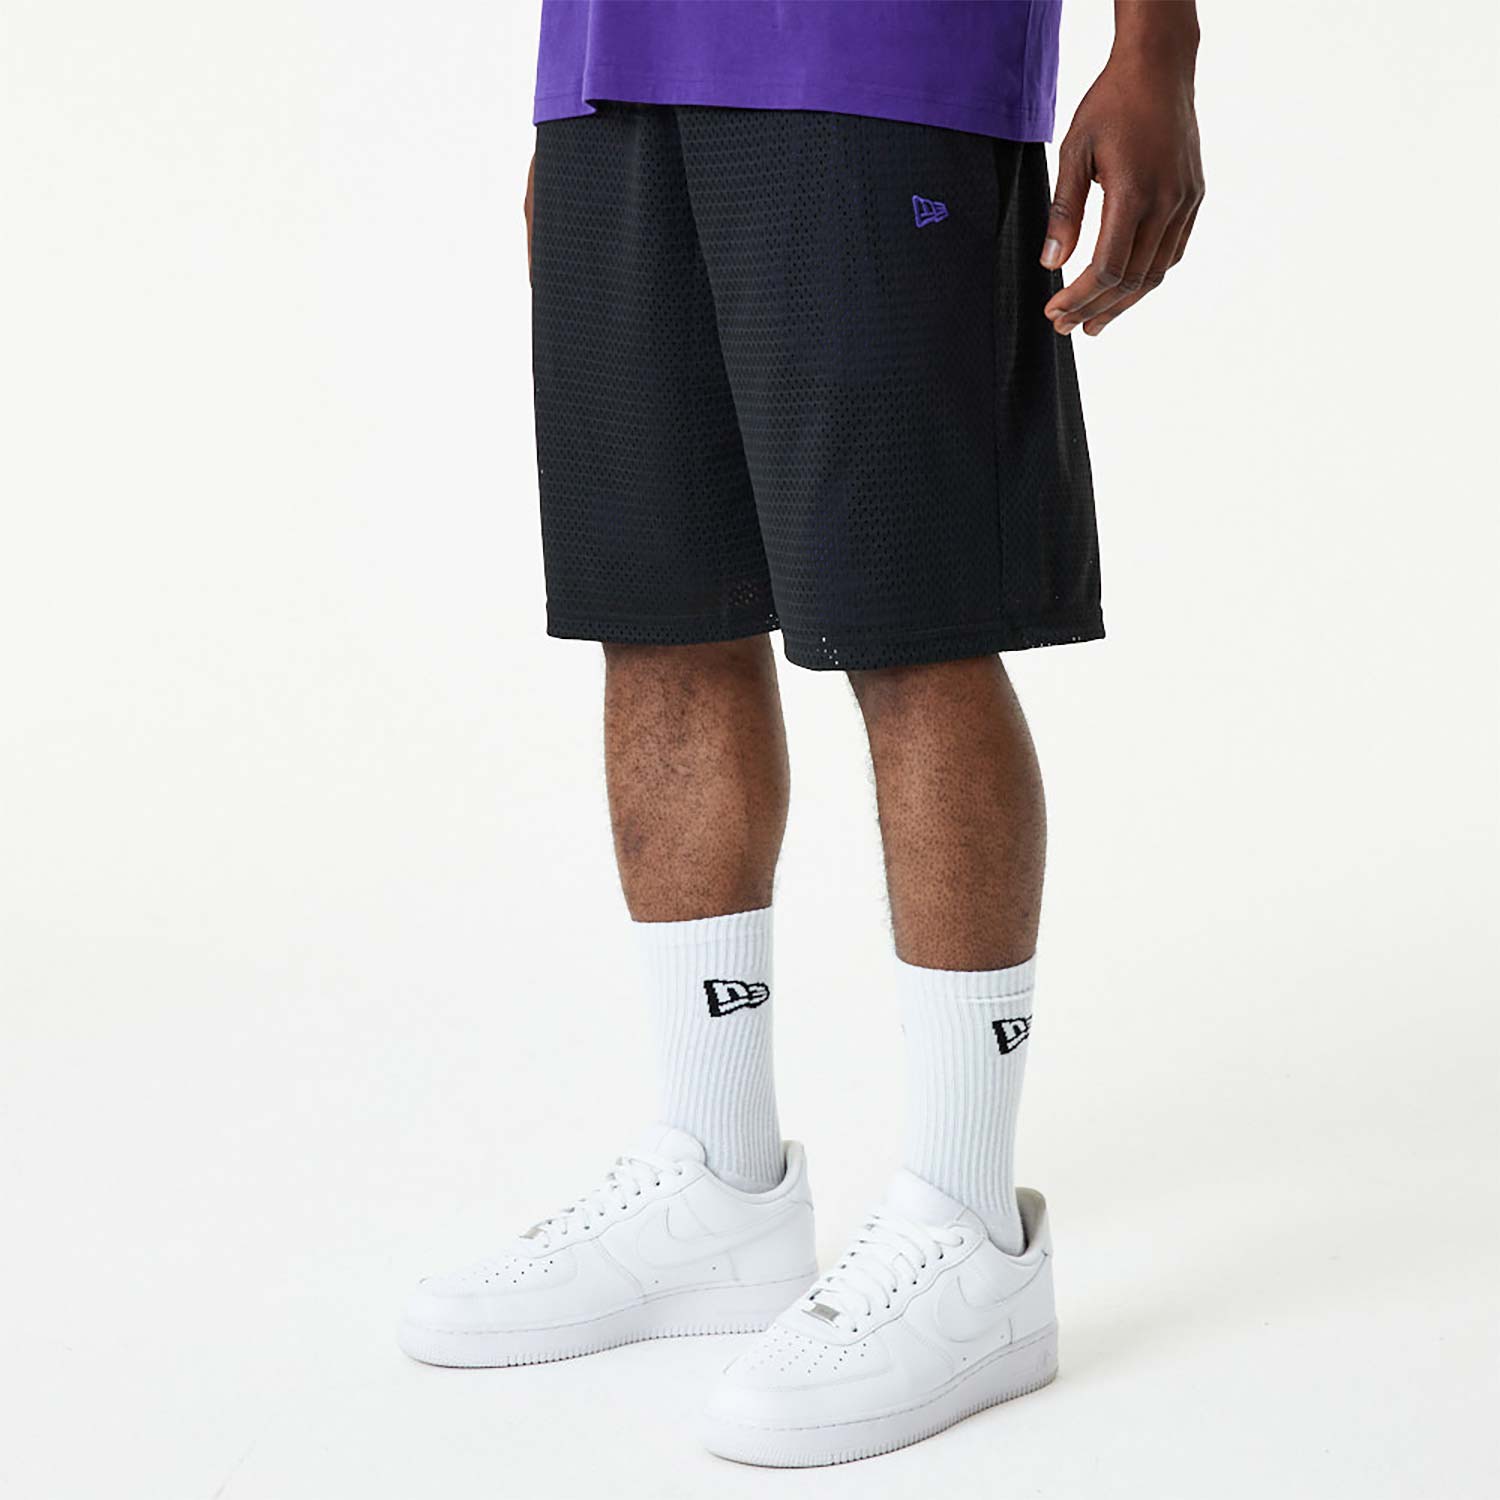 New Era Black And Purple Mesh Shorts